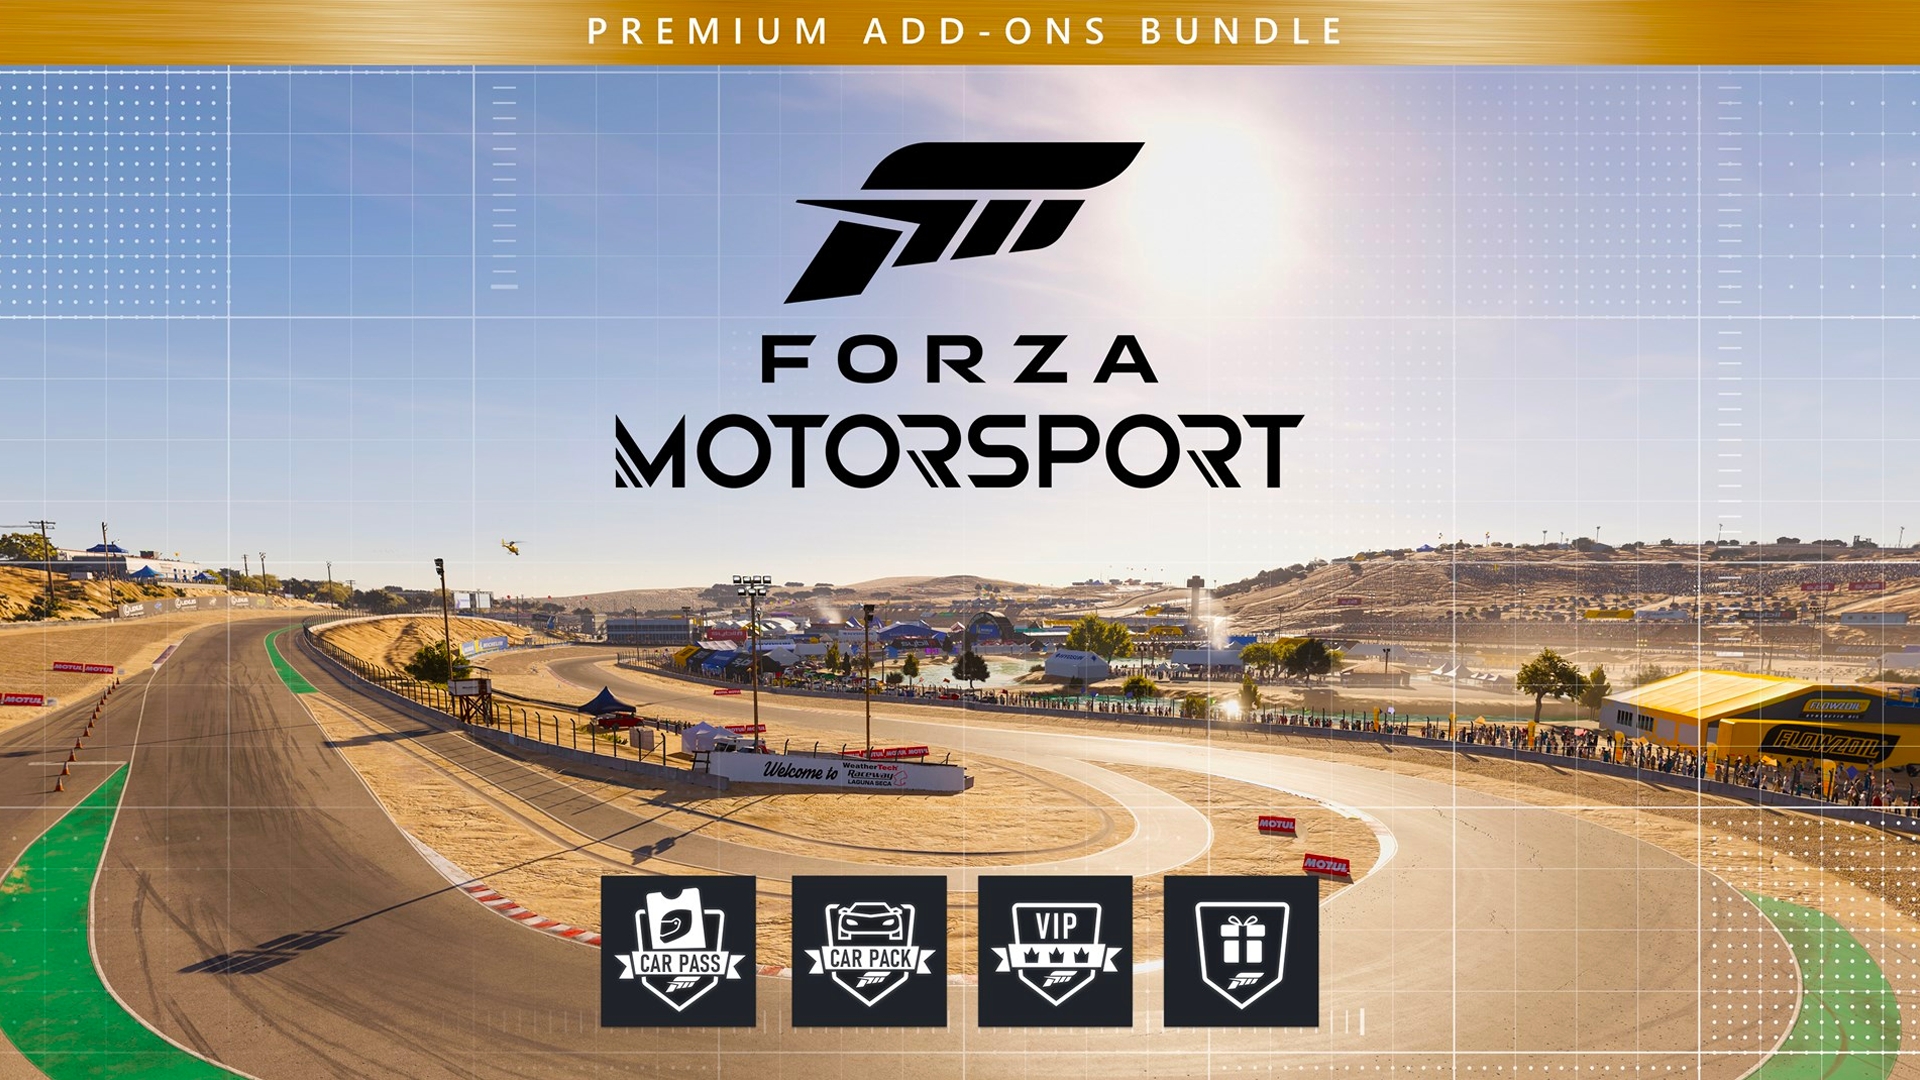 Comprar Forza Motorsport Premium Add-Ons Bundle (PC / Xbox ONE